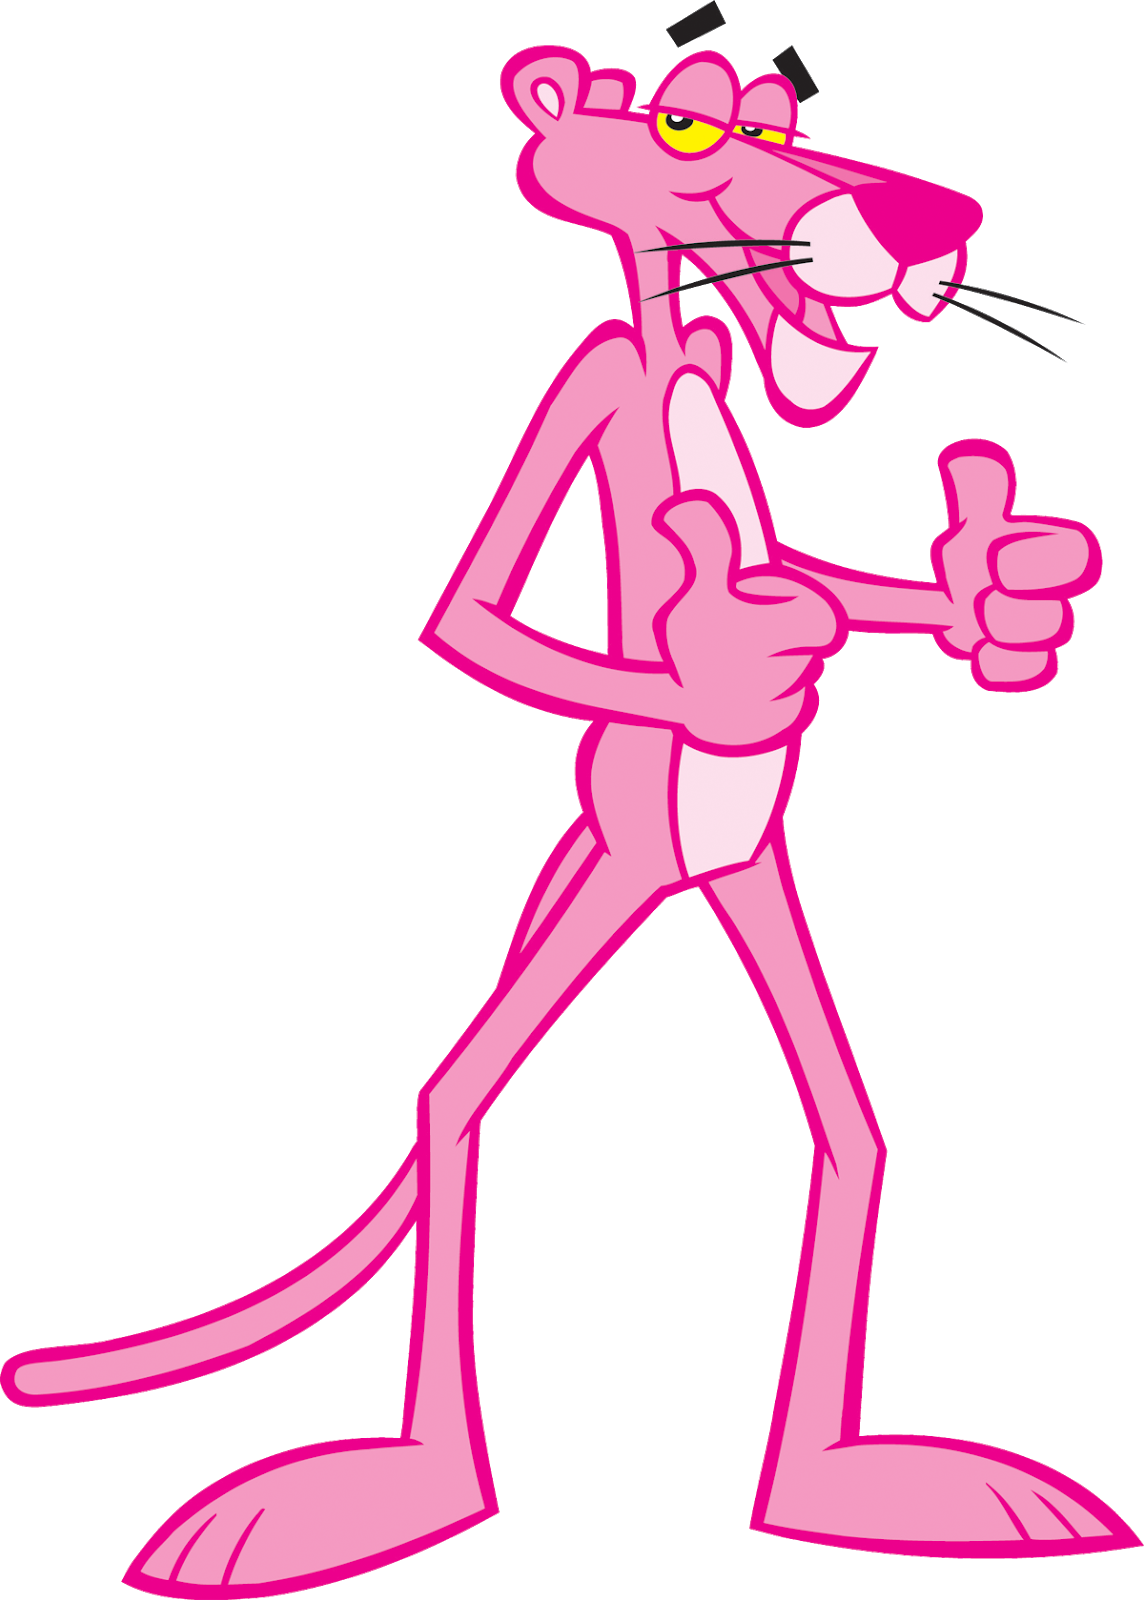 Pink panther watch cartoon. Розовая пантера 1964. Розовая пантера 1998. Розовые герои из мультиков.